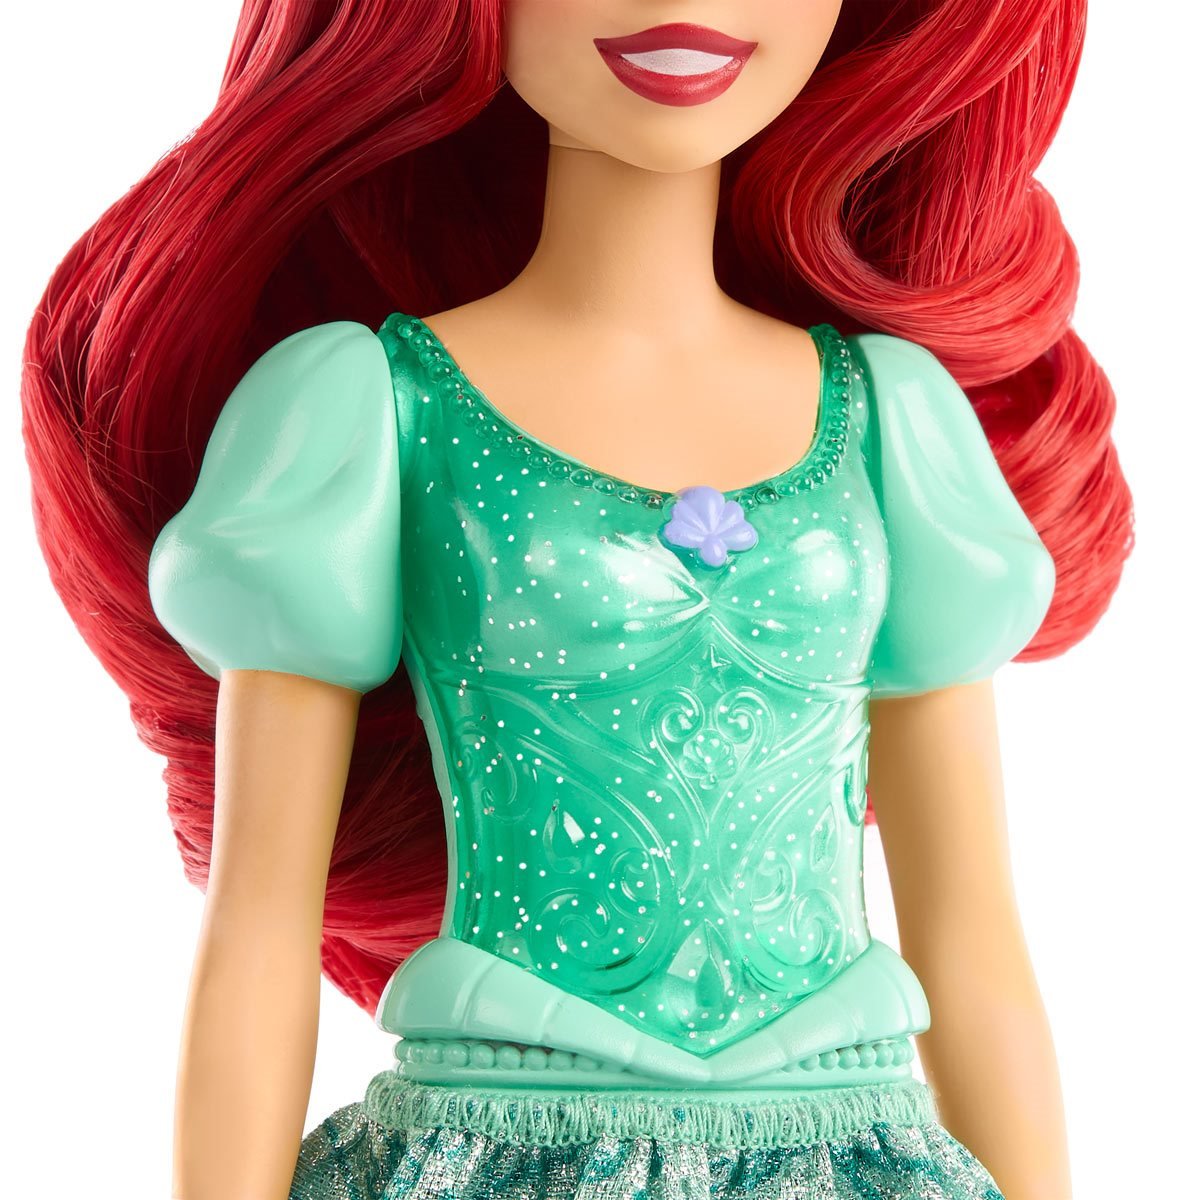 Ariel Barbie Doll 